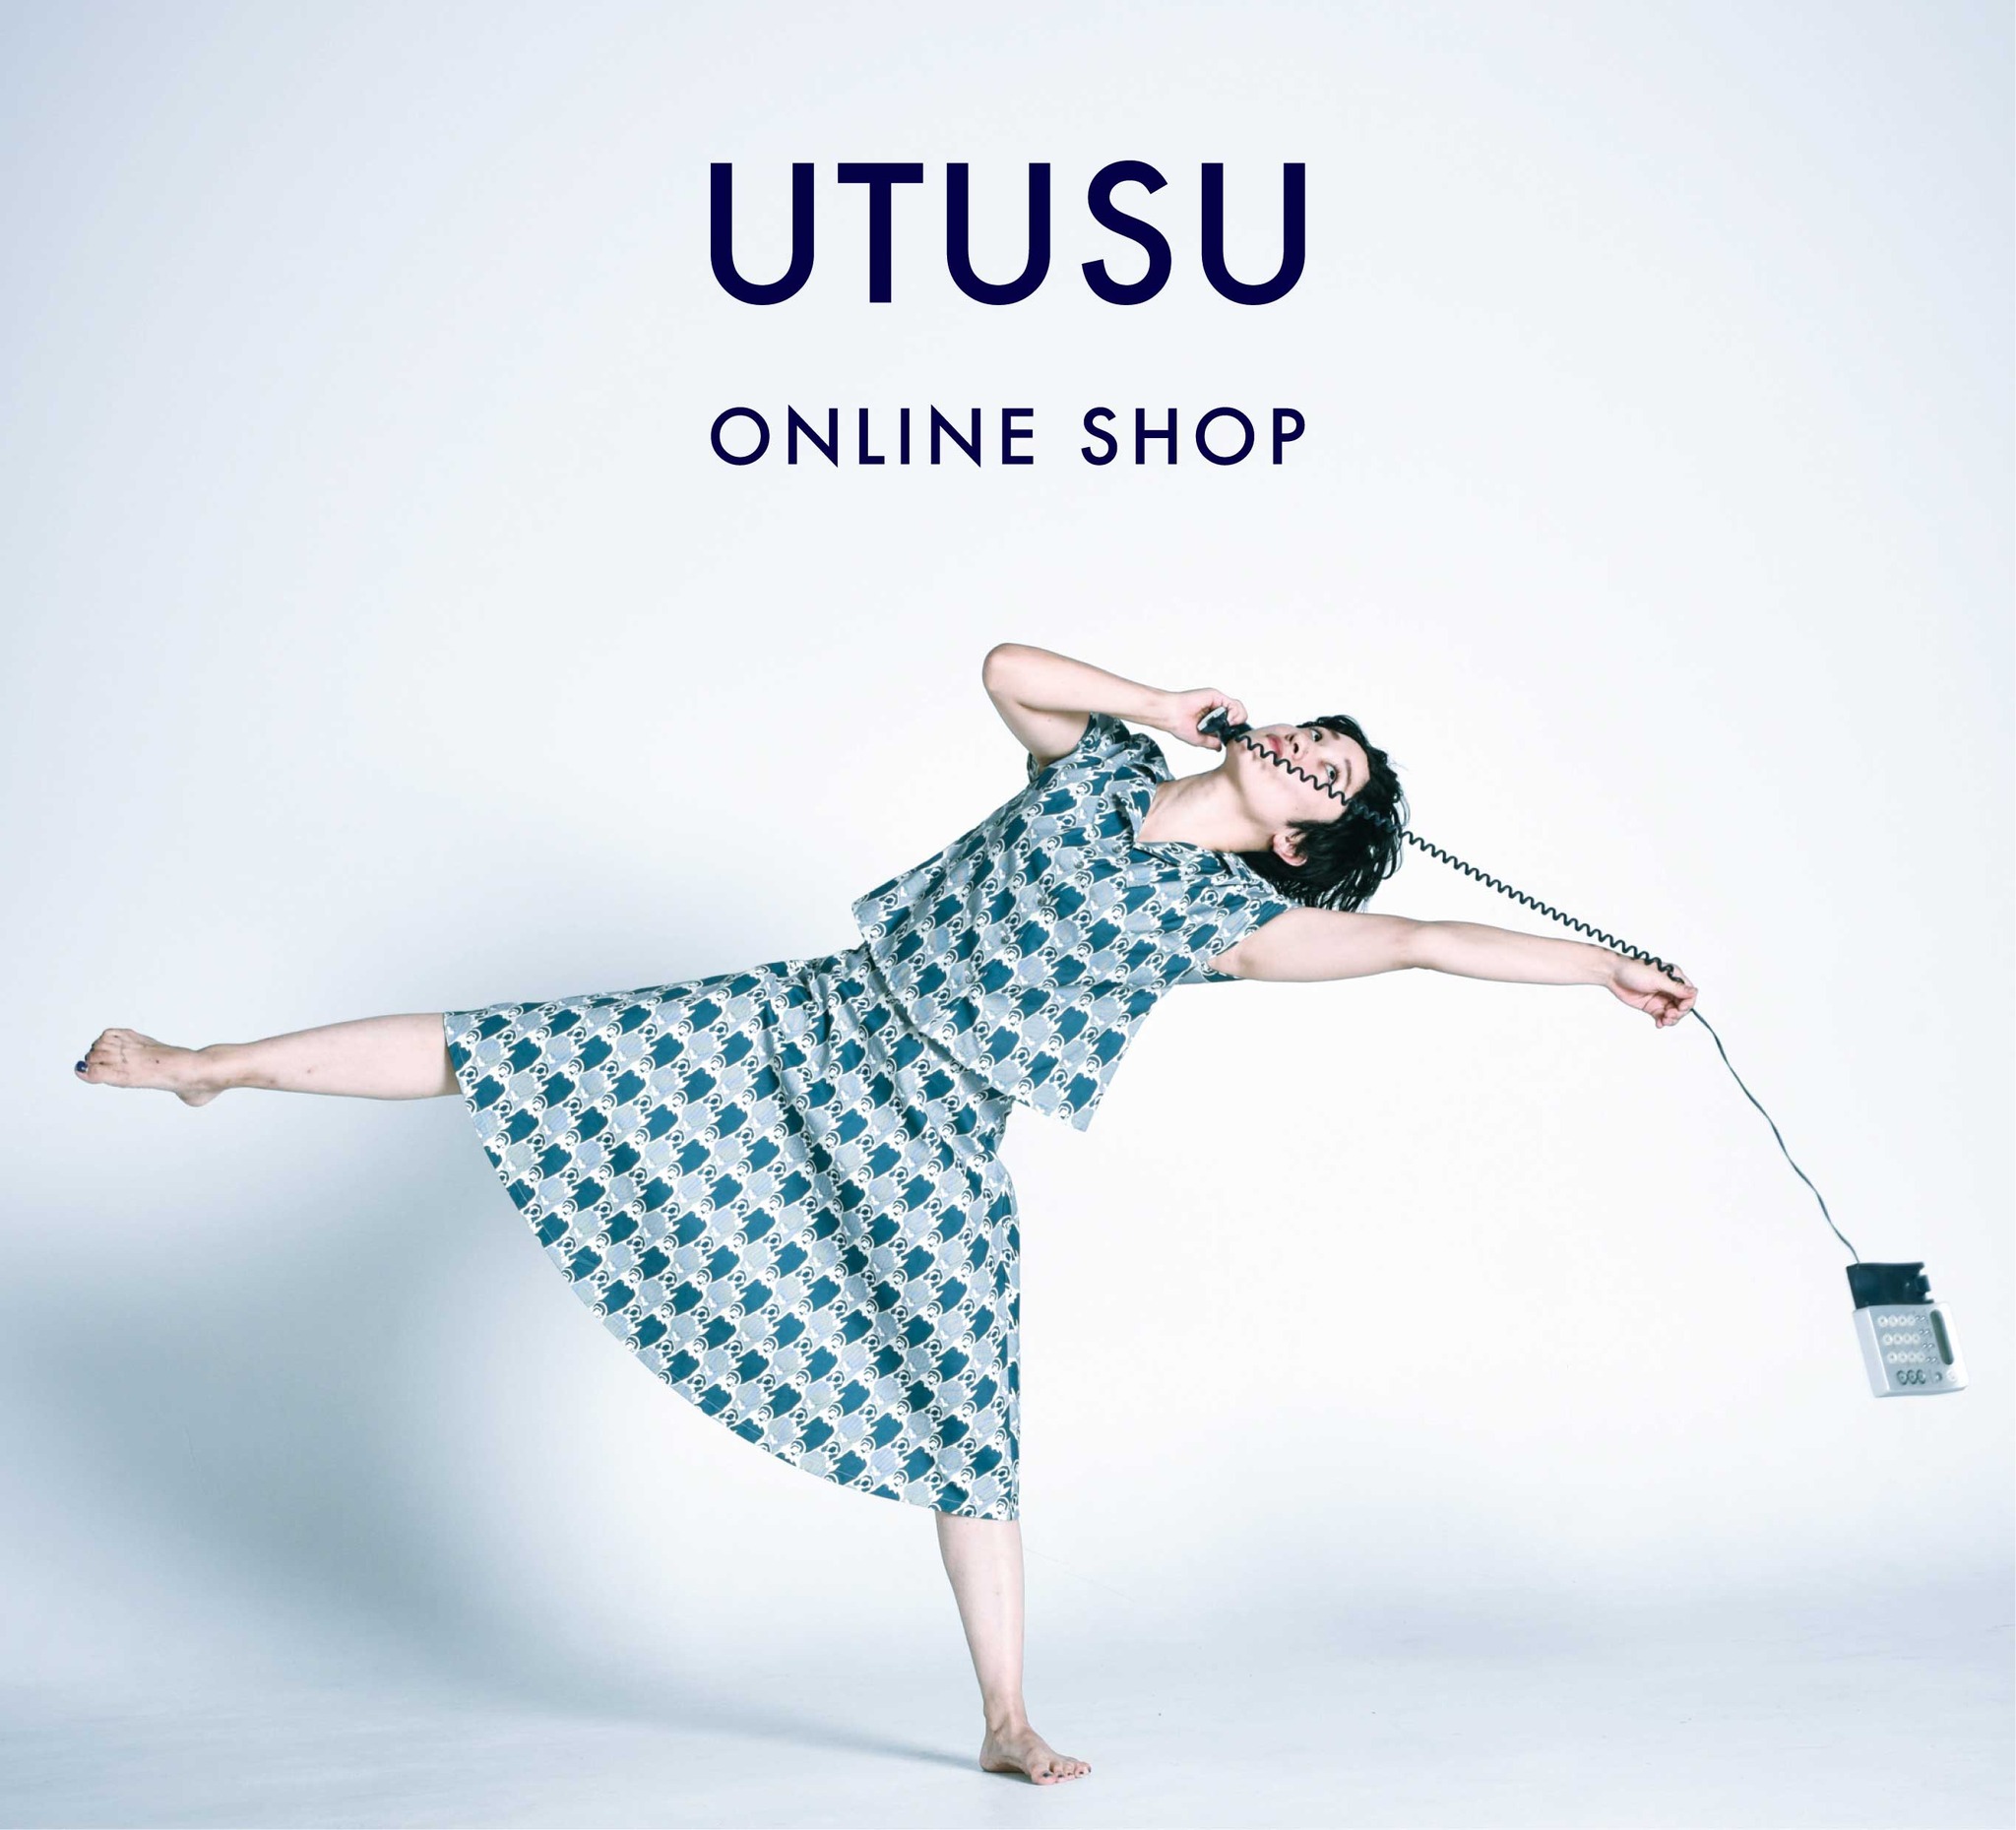 UTUSU online shop